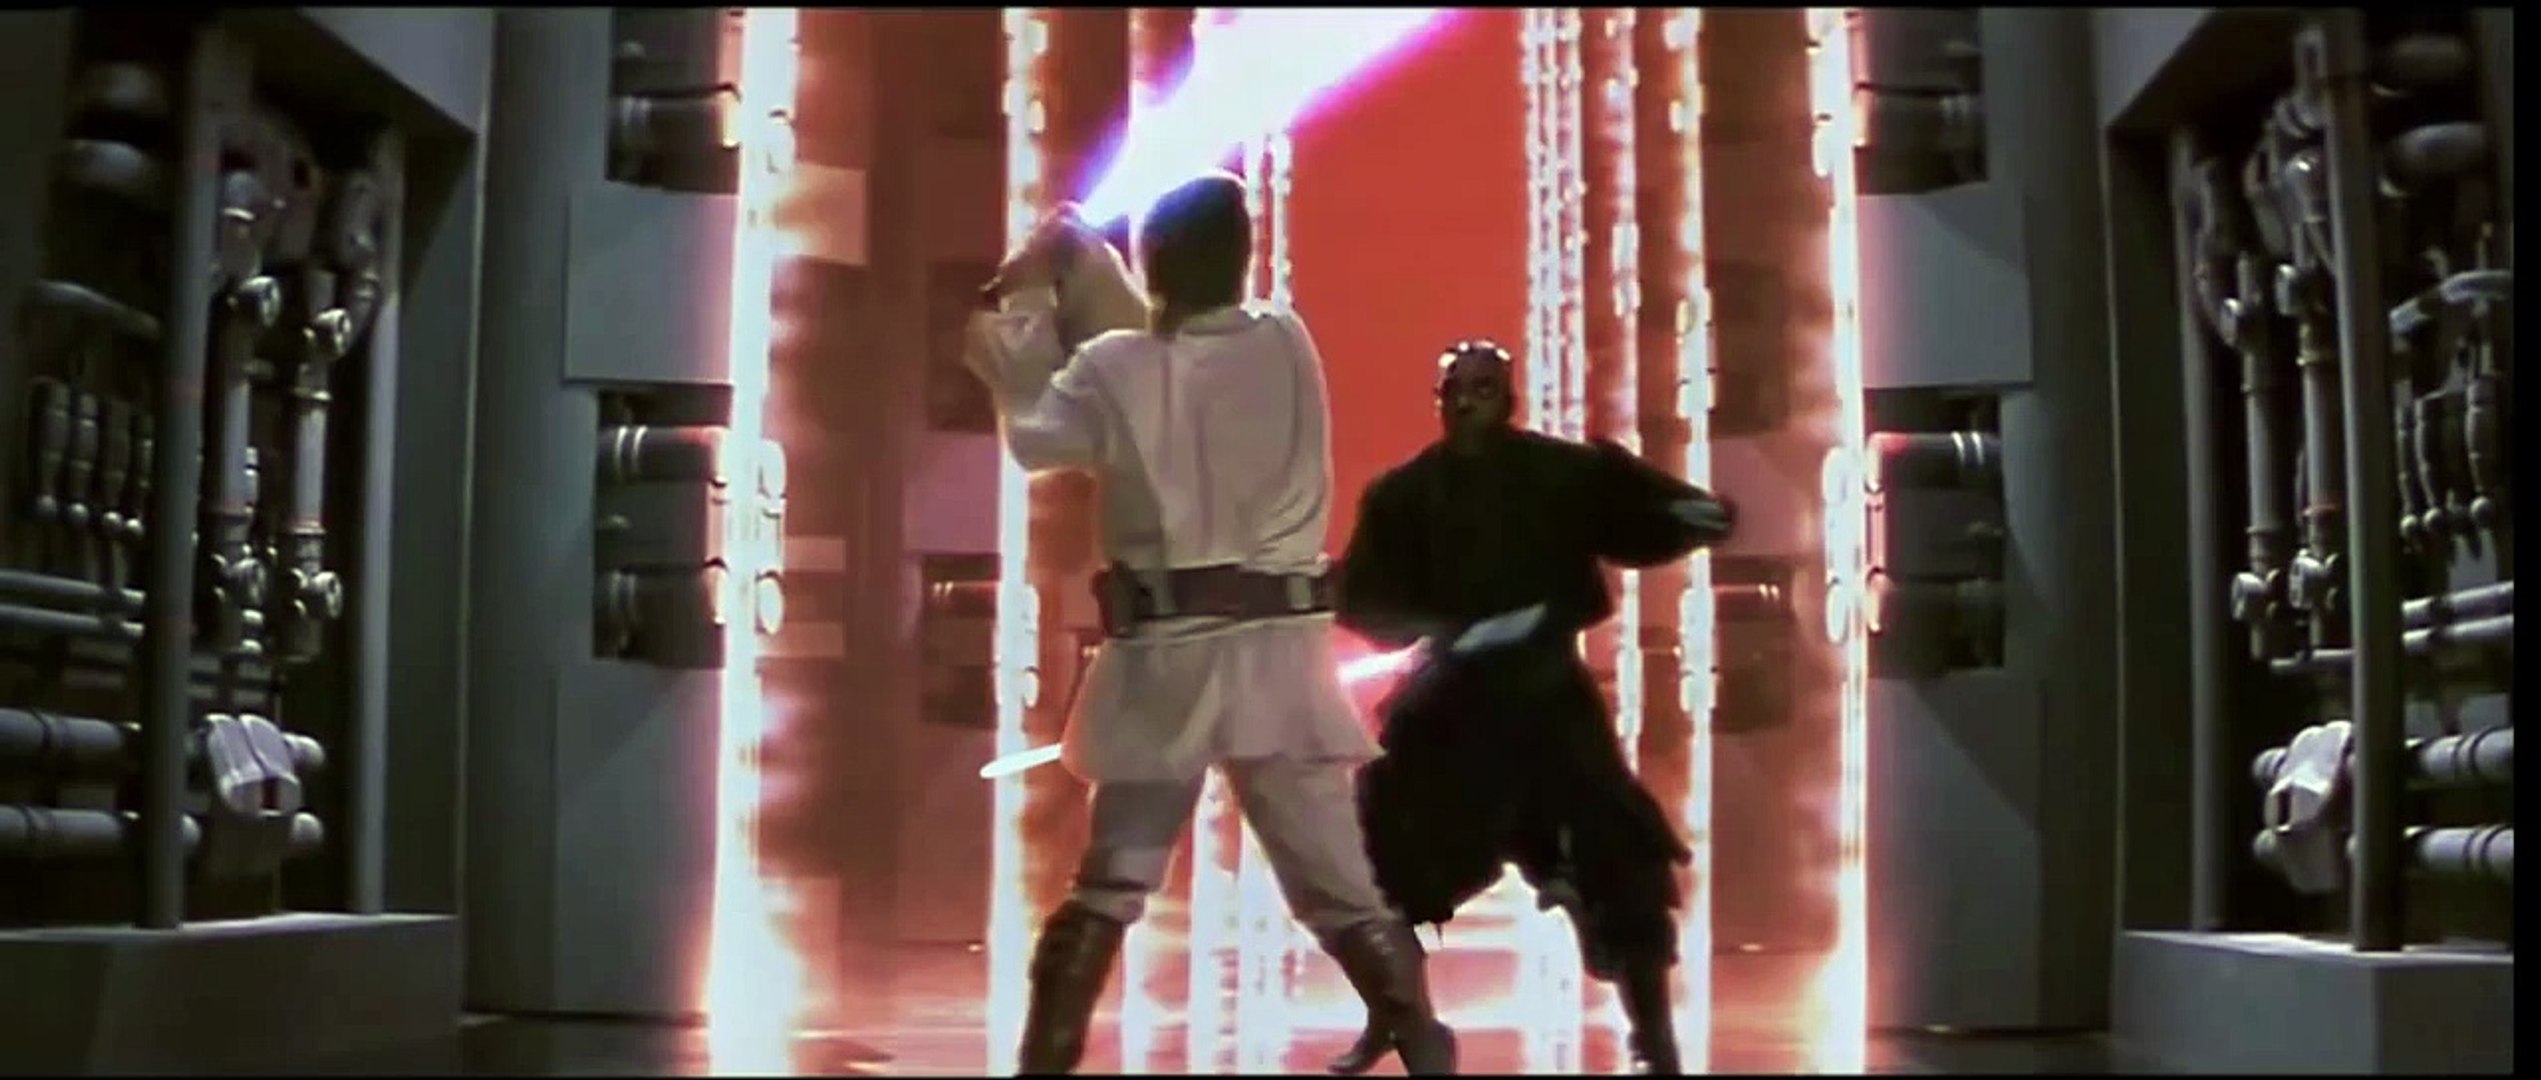 Star Wars Episode 1 light saber fights aren't realistic! More a nice dance  Ballet.. - Vidéo Dailymotion